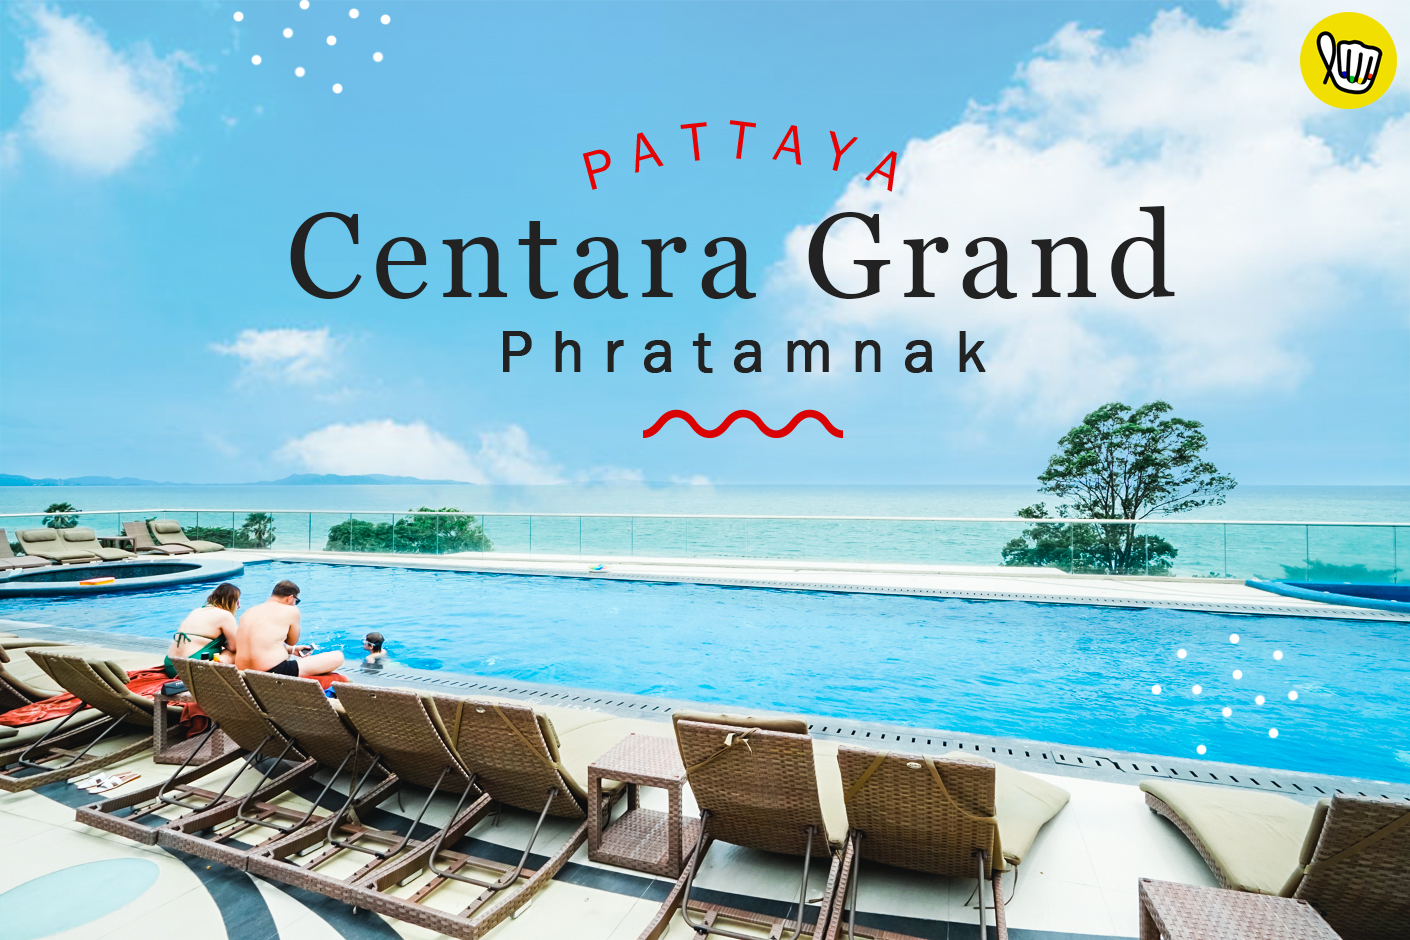 Centara Grand Phratamnak Pattaya